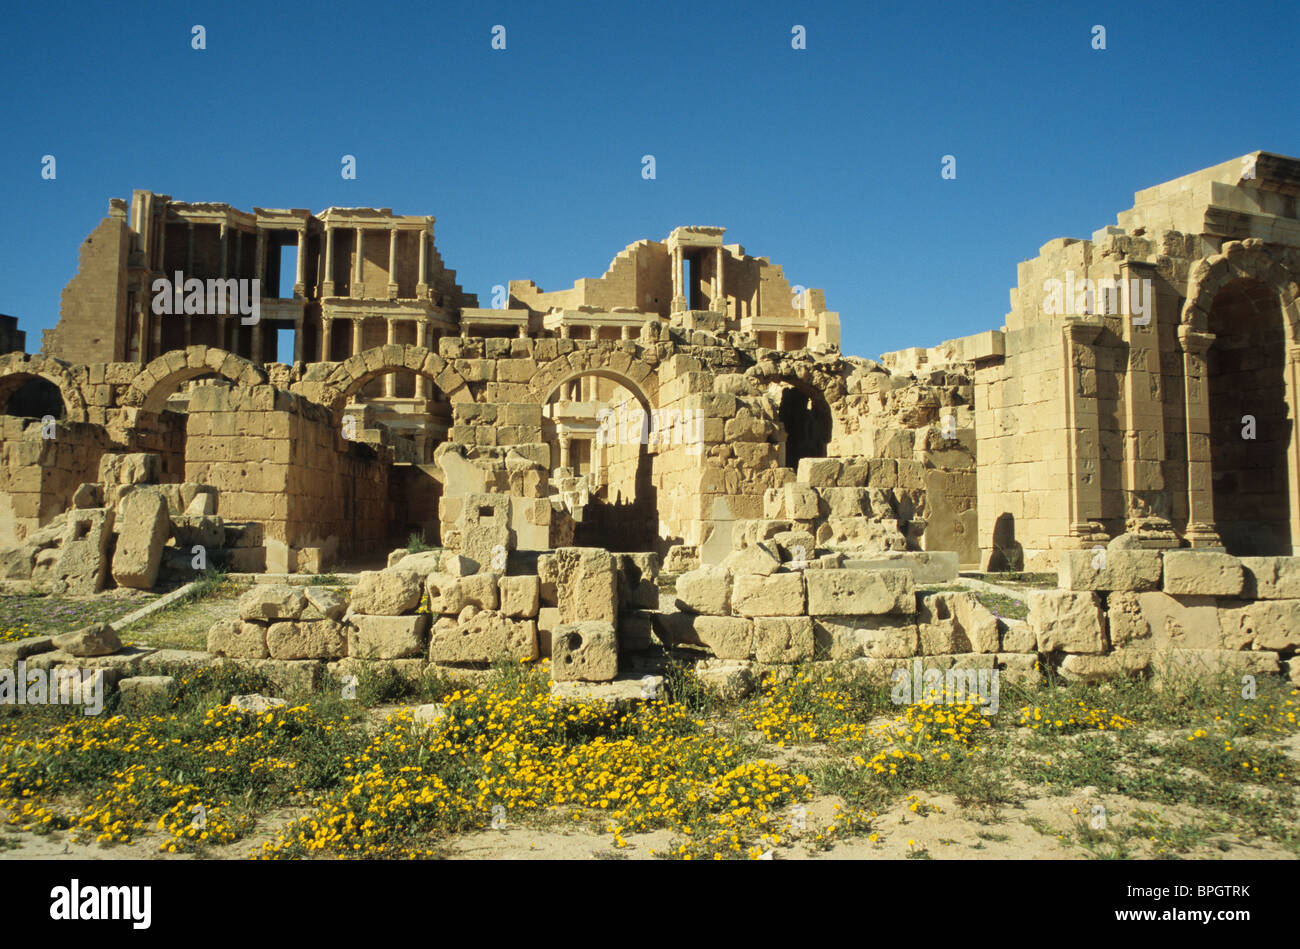 Late 3rd century roman theater, Sabratha, Libya Stock Photo